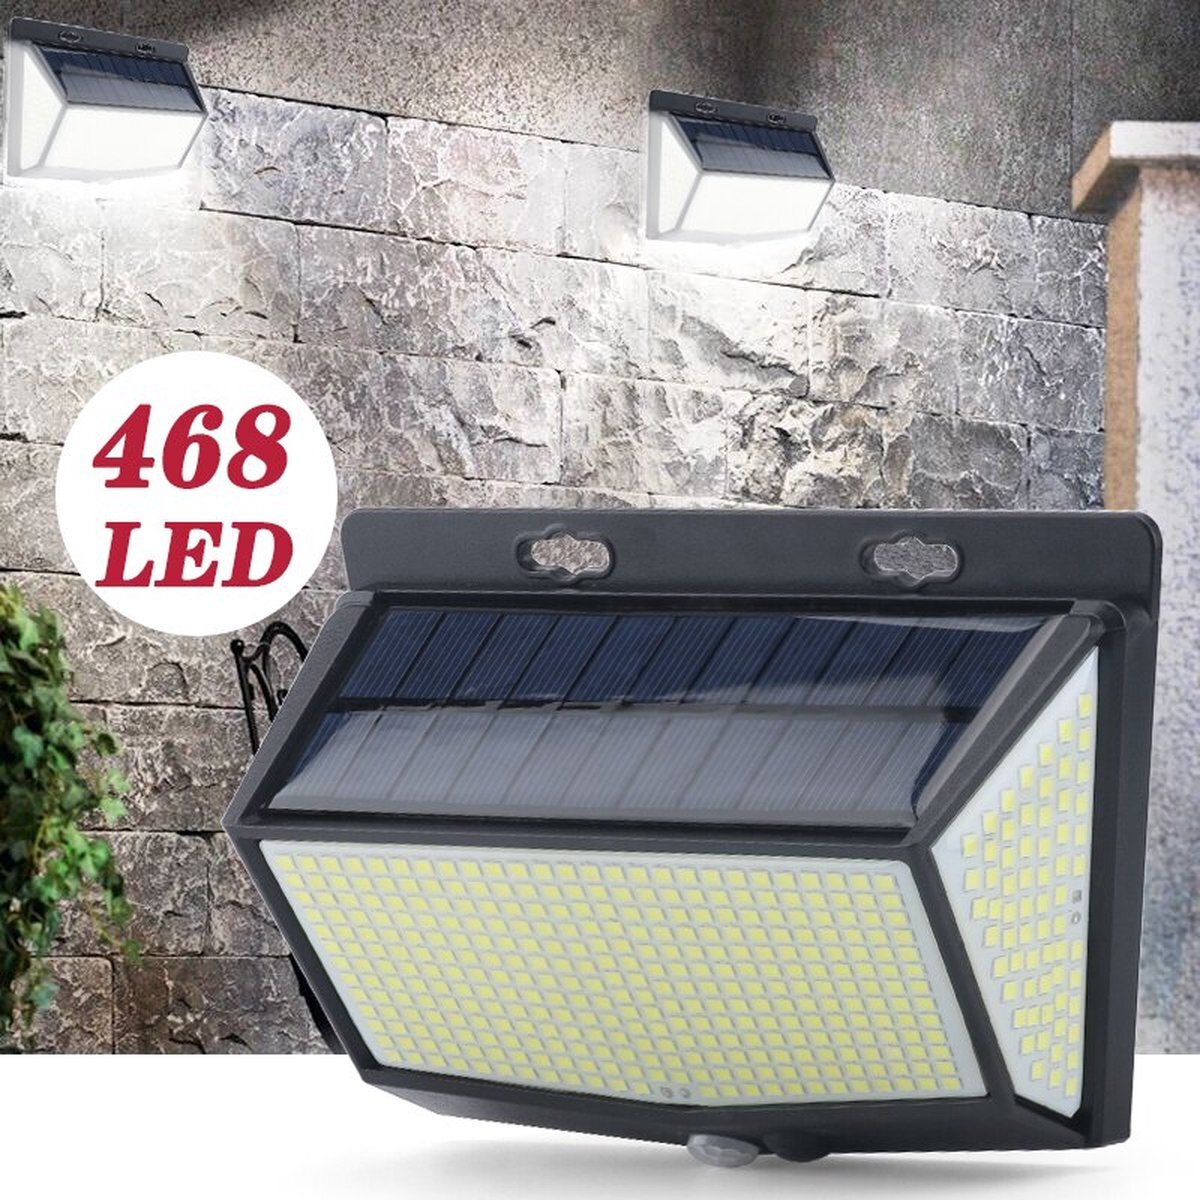 Lichtendirect Solar LED buiten Lamp - 468 LEDS Verlichting - Verlichting op Zonne-energie - Bewegingssensor- IP65 Waterdicht | Buitenverlichting - Buitenlamp op solar verlichting - Nachtsensor - Tuinlamp